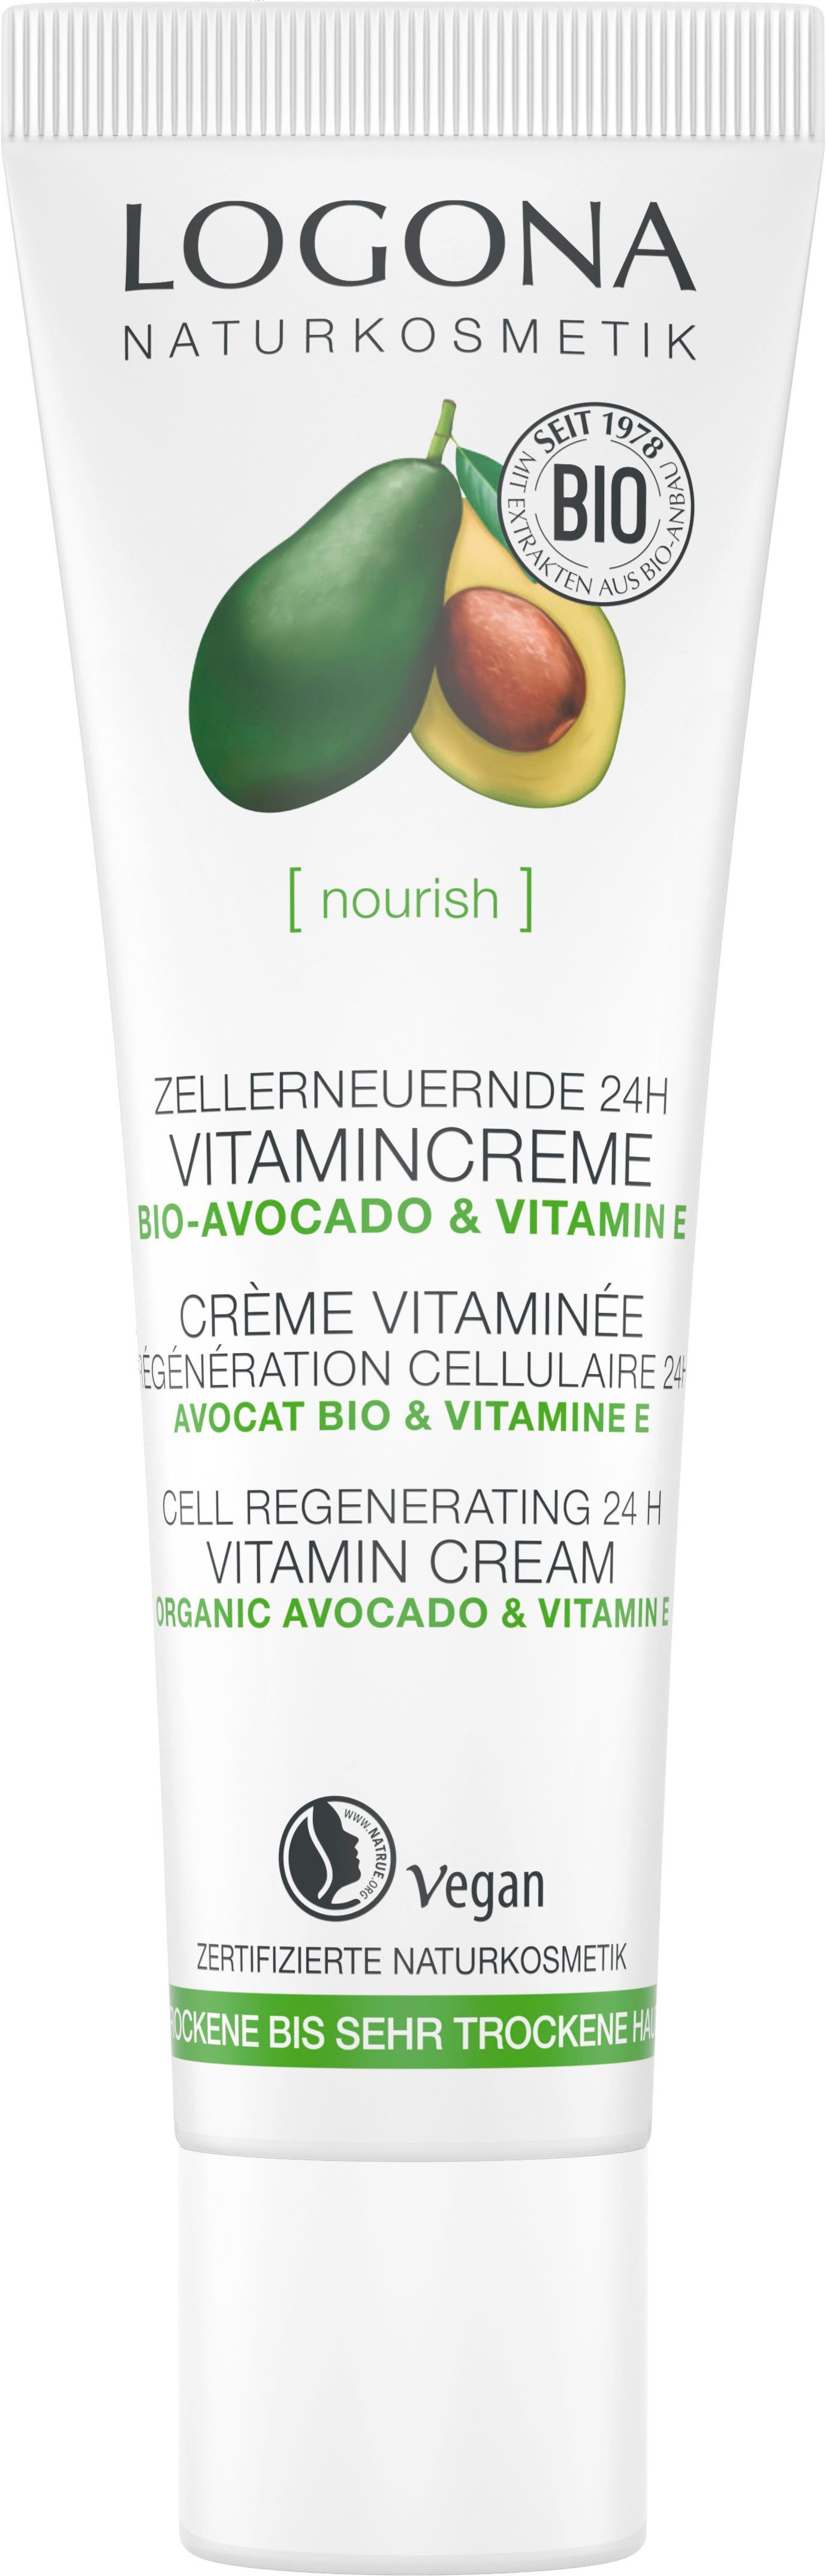 LOGONA Tagescreme Logona [nourish] Zellerneuernde Vit.Creme, NaTrue  zertifizierte Naturkosmetik mit veganer Formel